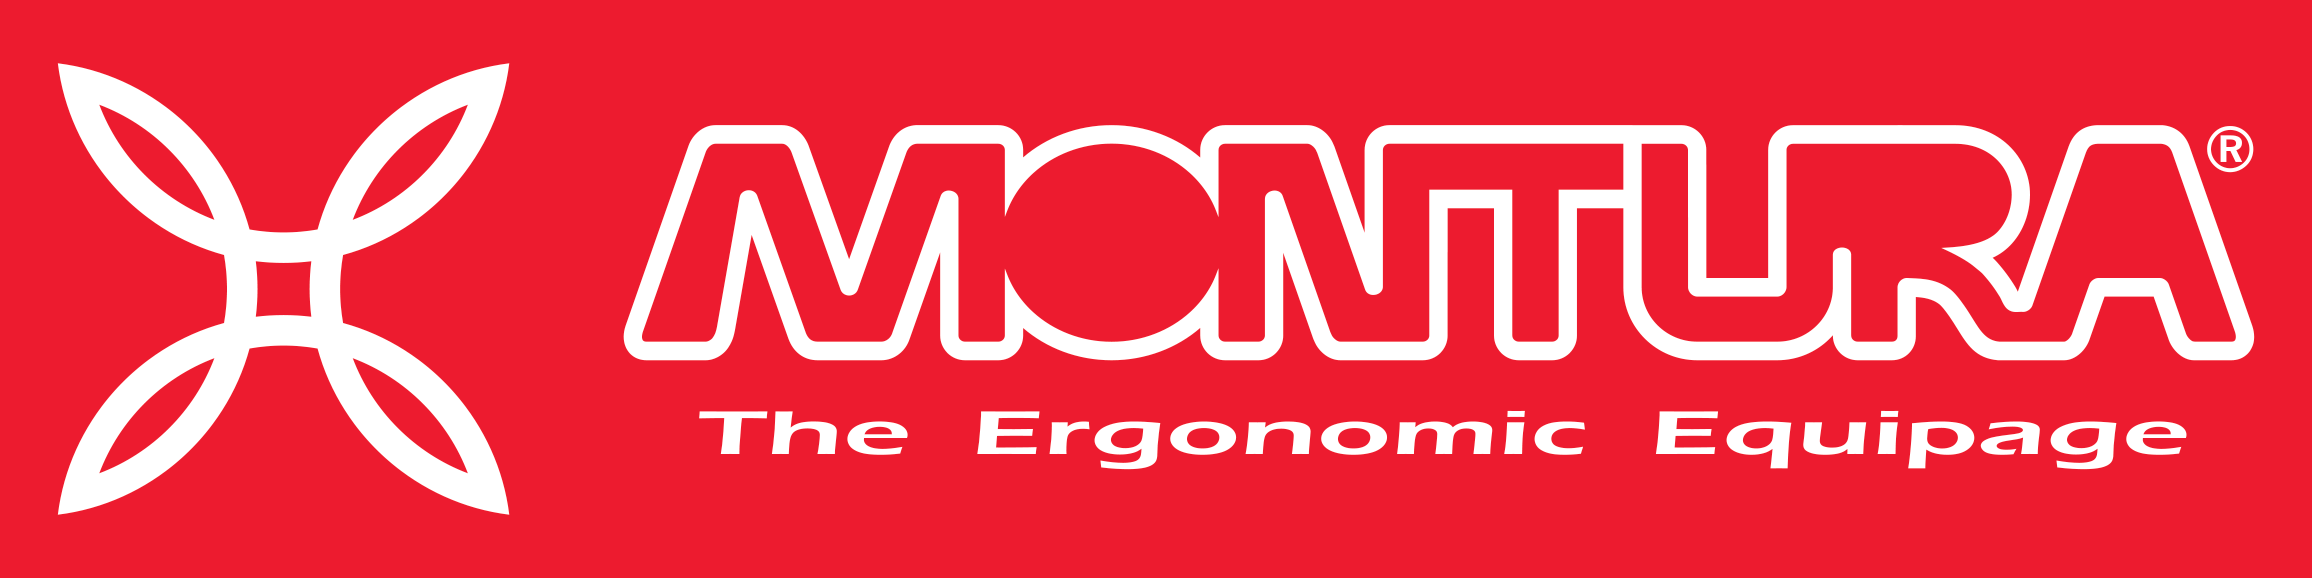 Logo MONTURA vettoriale - sfondo rosso.png